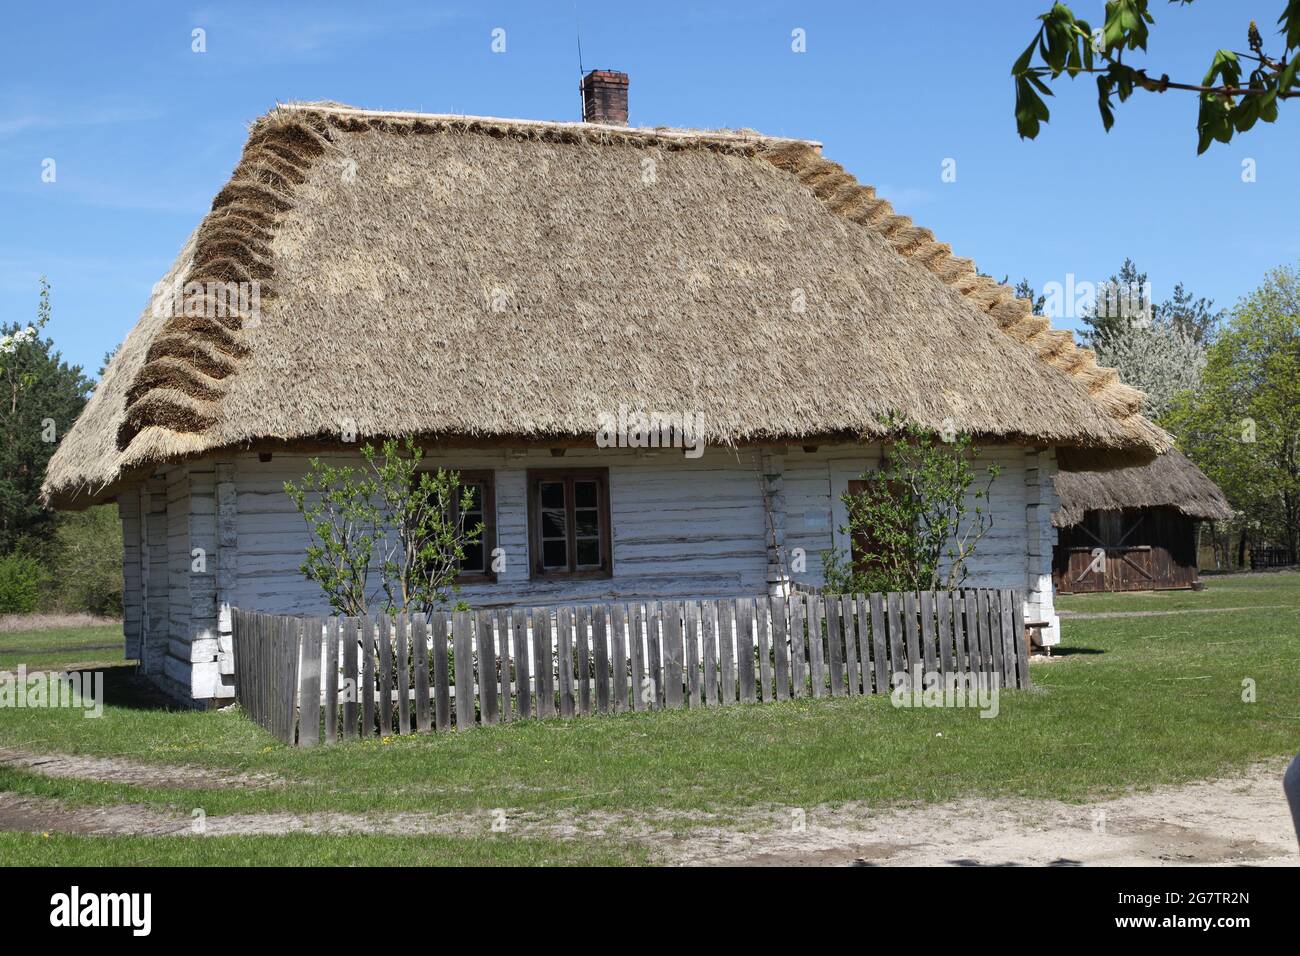 Ancienne maison de campagne, musée en plein air à Tokarnia, Tokarnia, swietokrzyskie, Pologne, architecture rurale, Banque D'Images